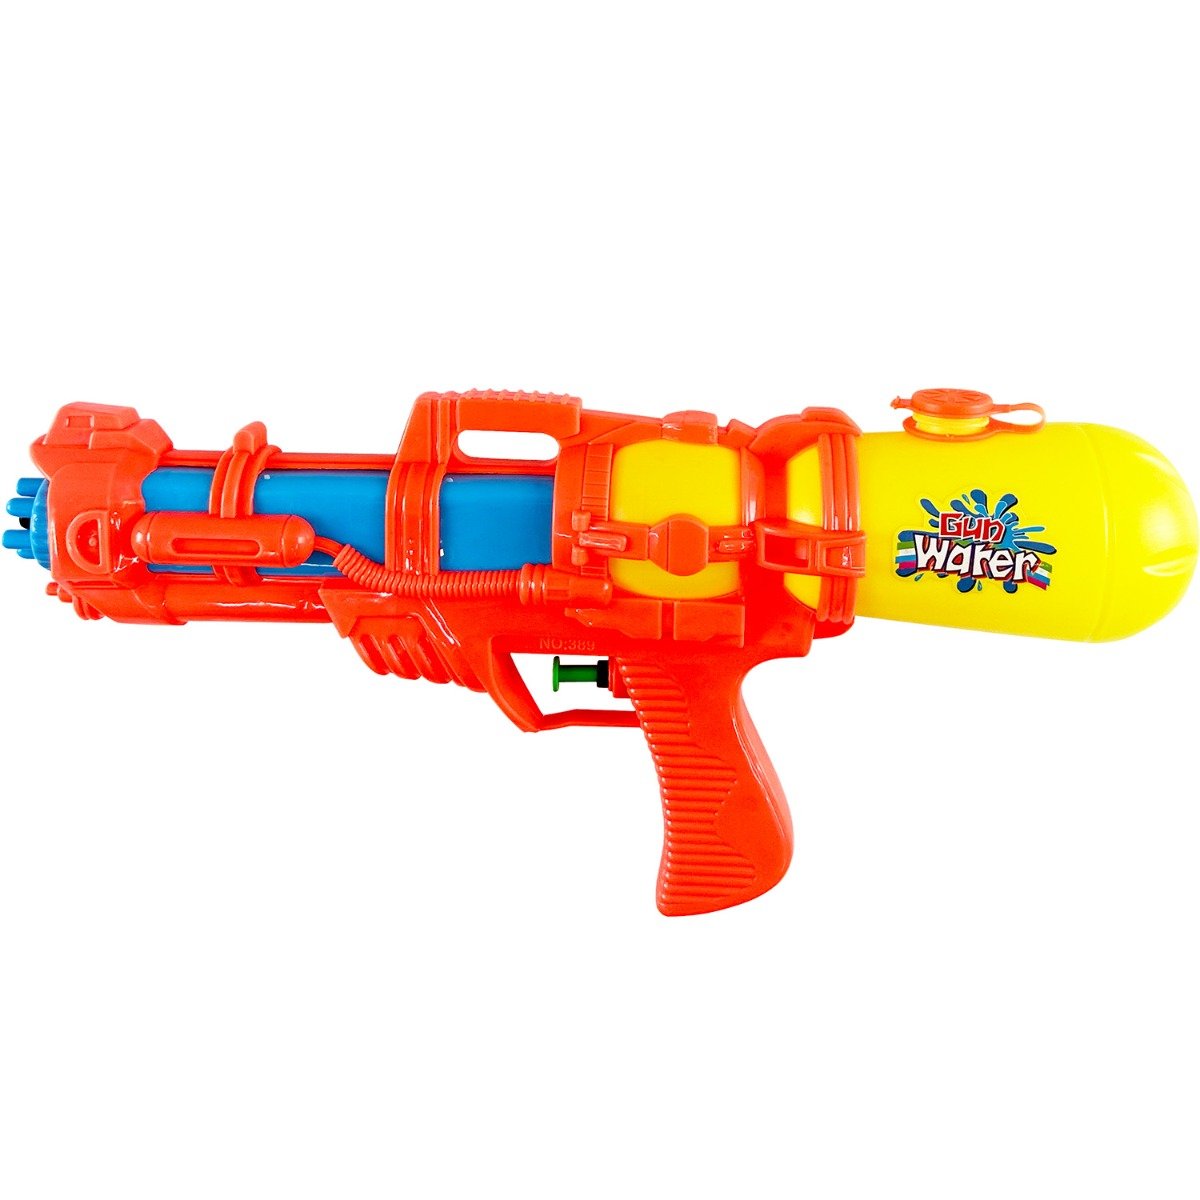 Poze Pistol cu apa, Zapp Toys Swoosh, 37 cm, Galben